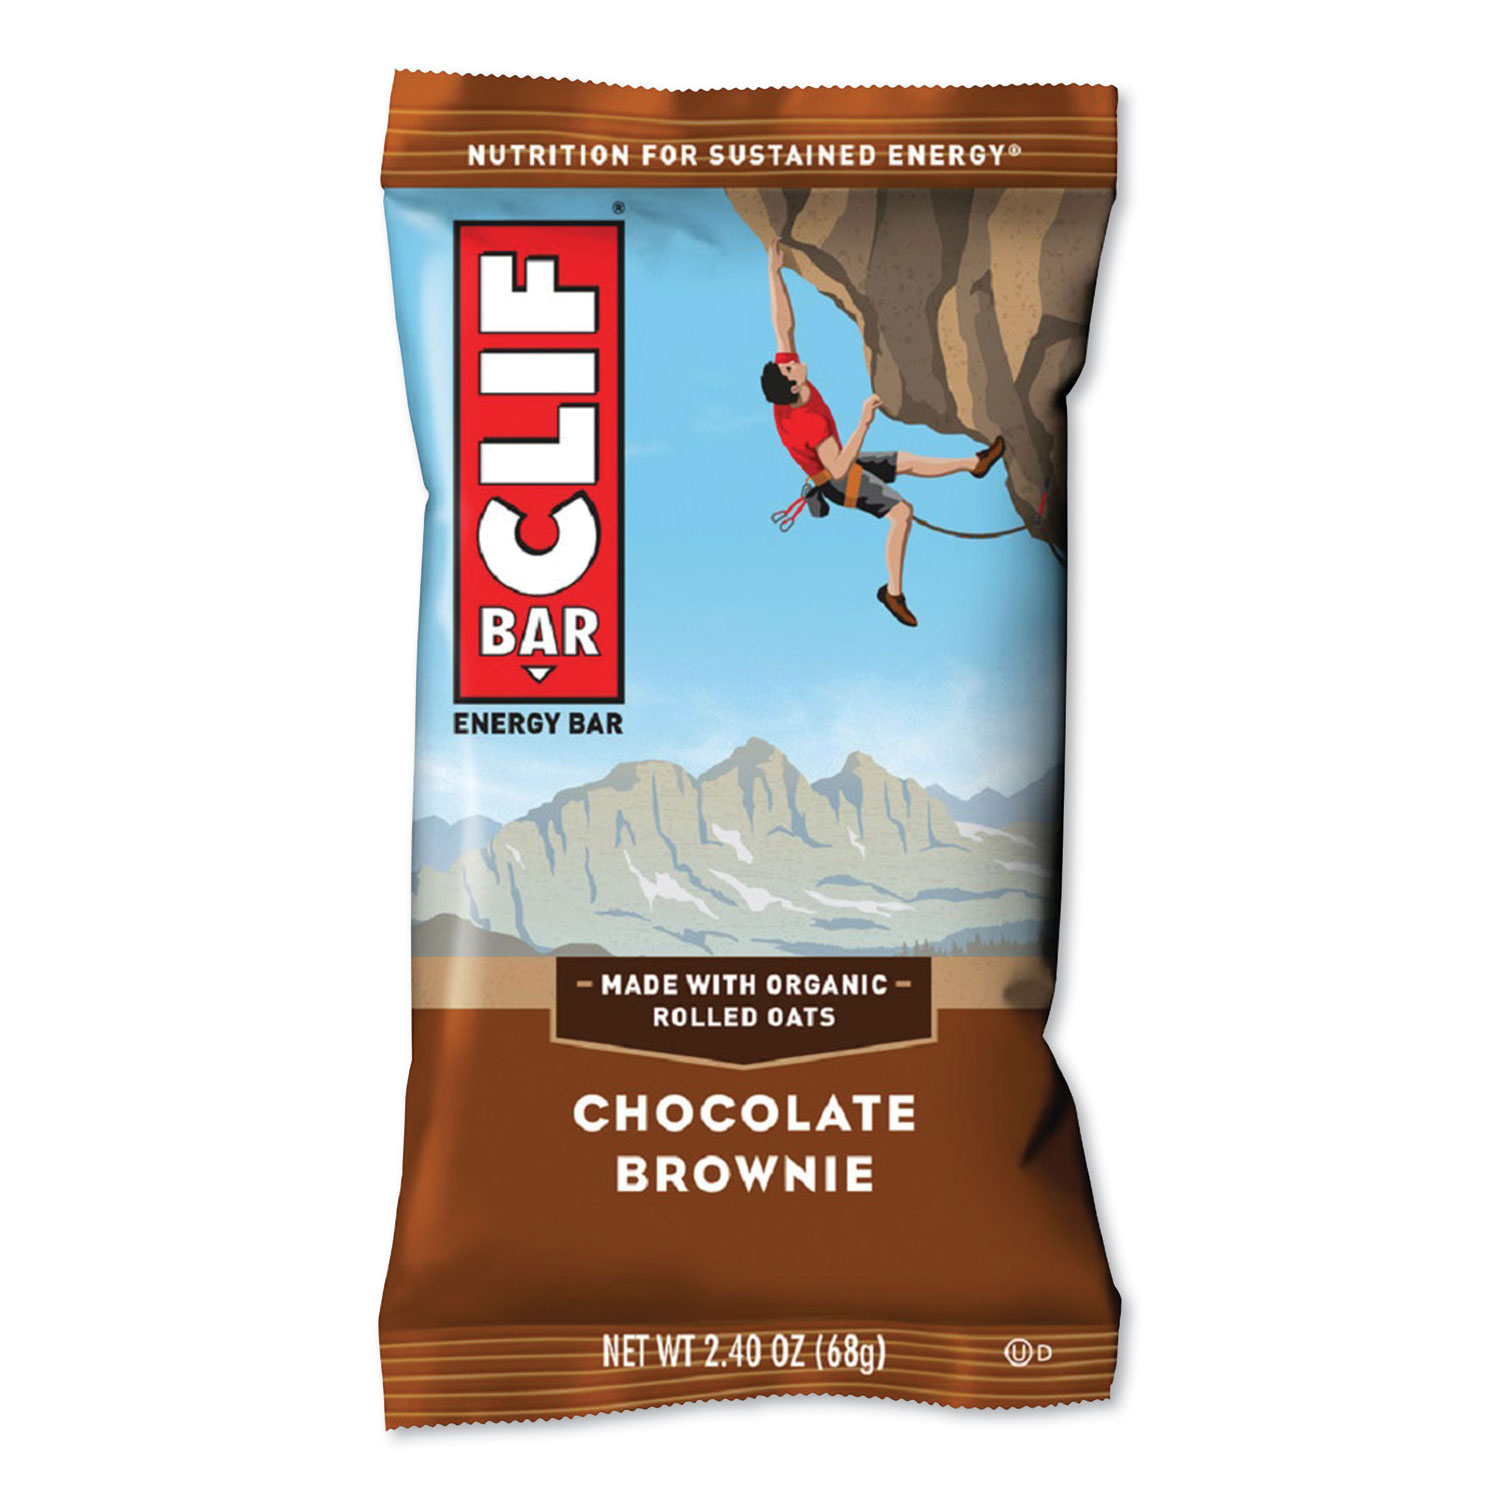 CLIF® Bar Energy Bar, Chocolate Brownie, 2.4 oz Bar, 12 Bars/Box